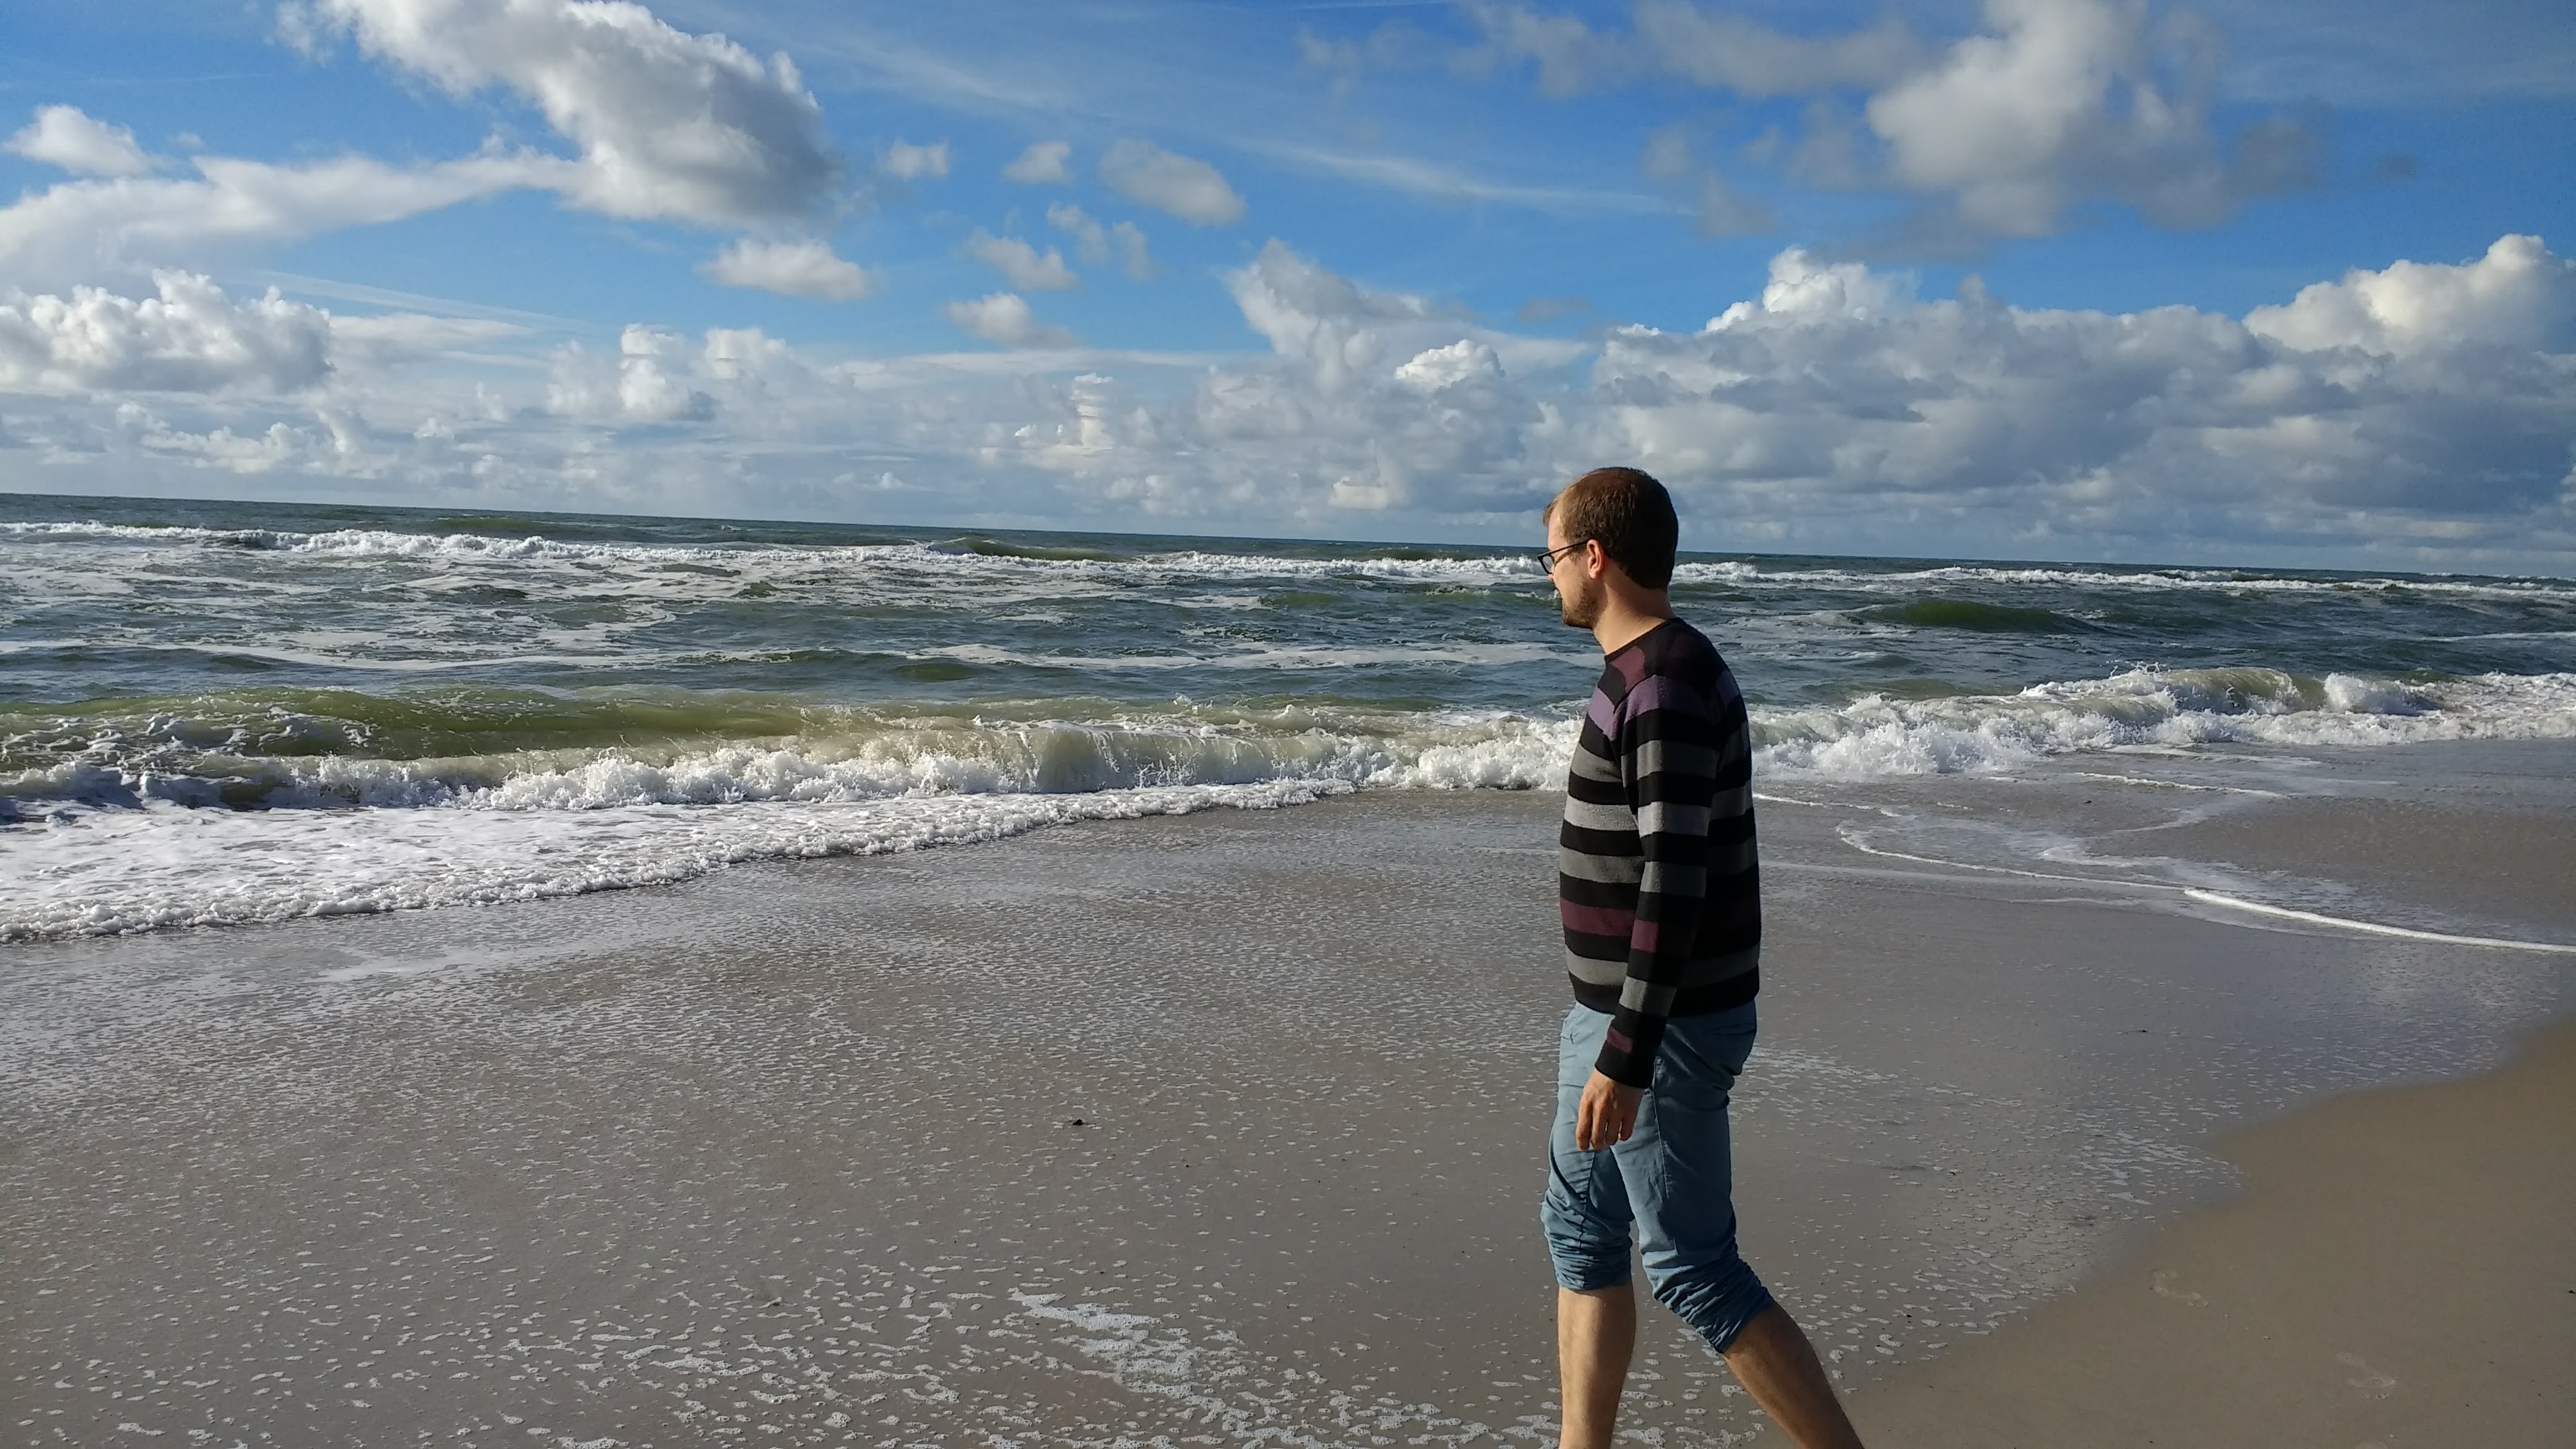 Me at "Vesterhavet", the west coast of Jylland, Denmark